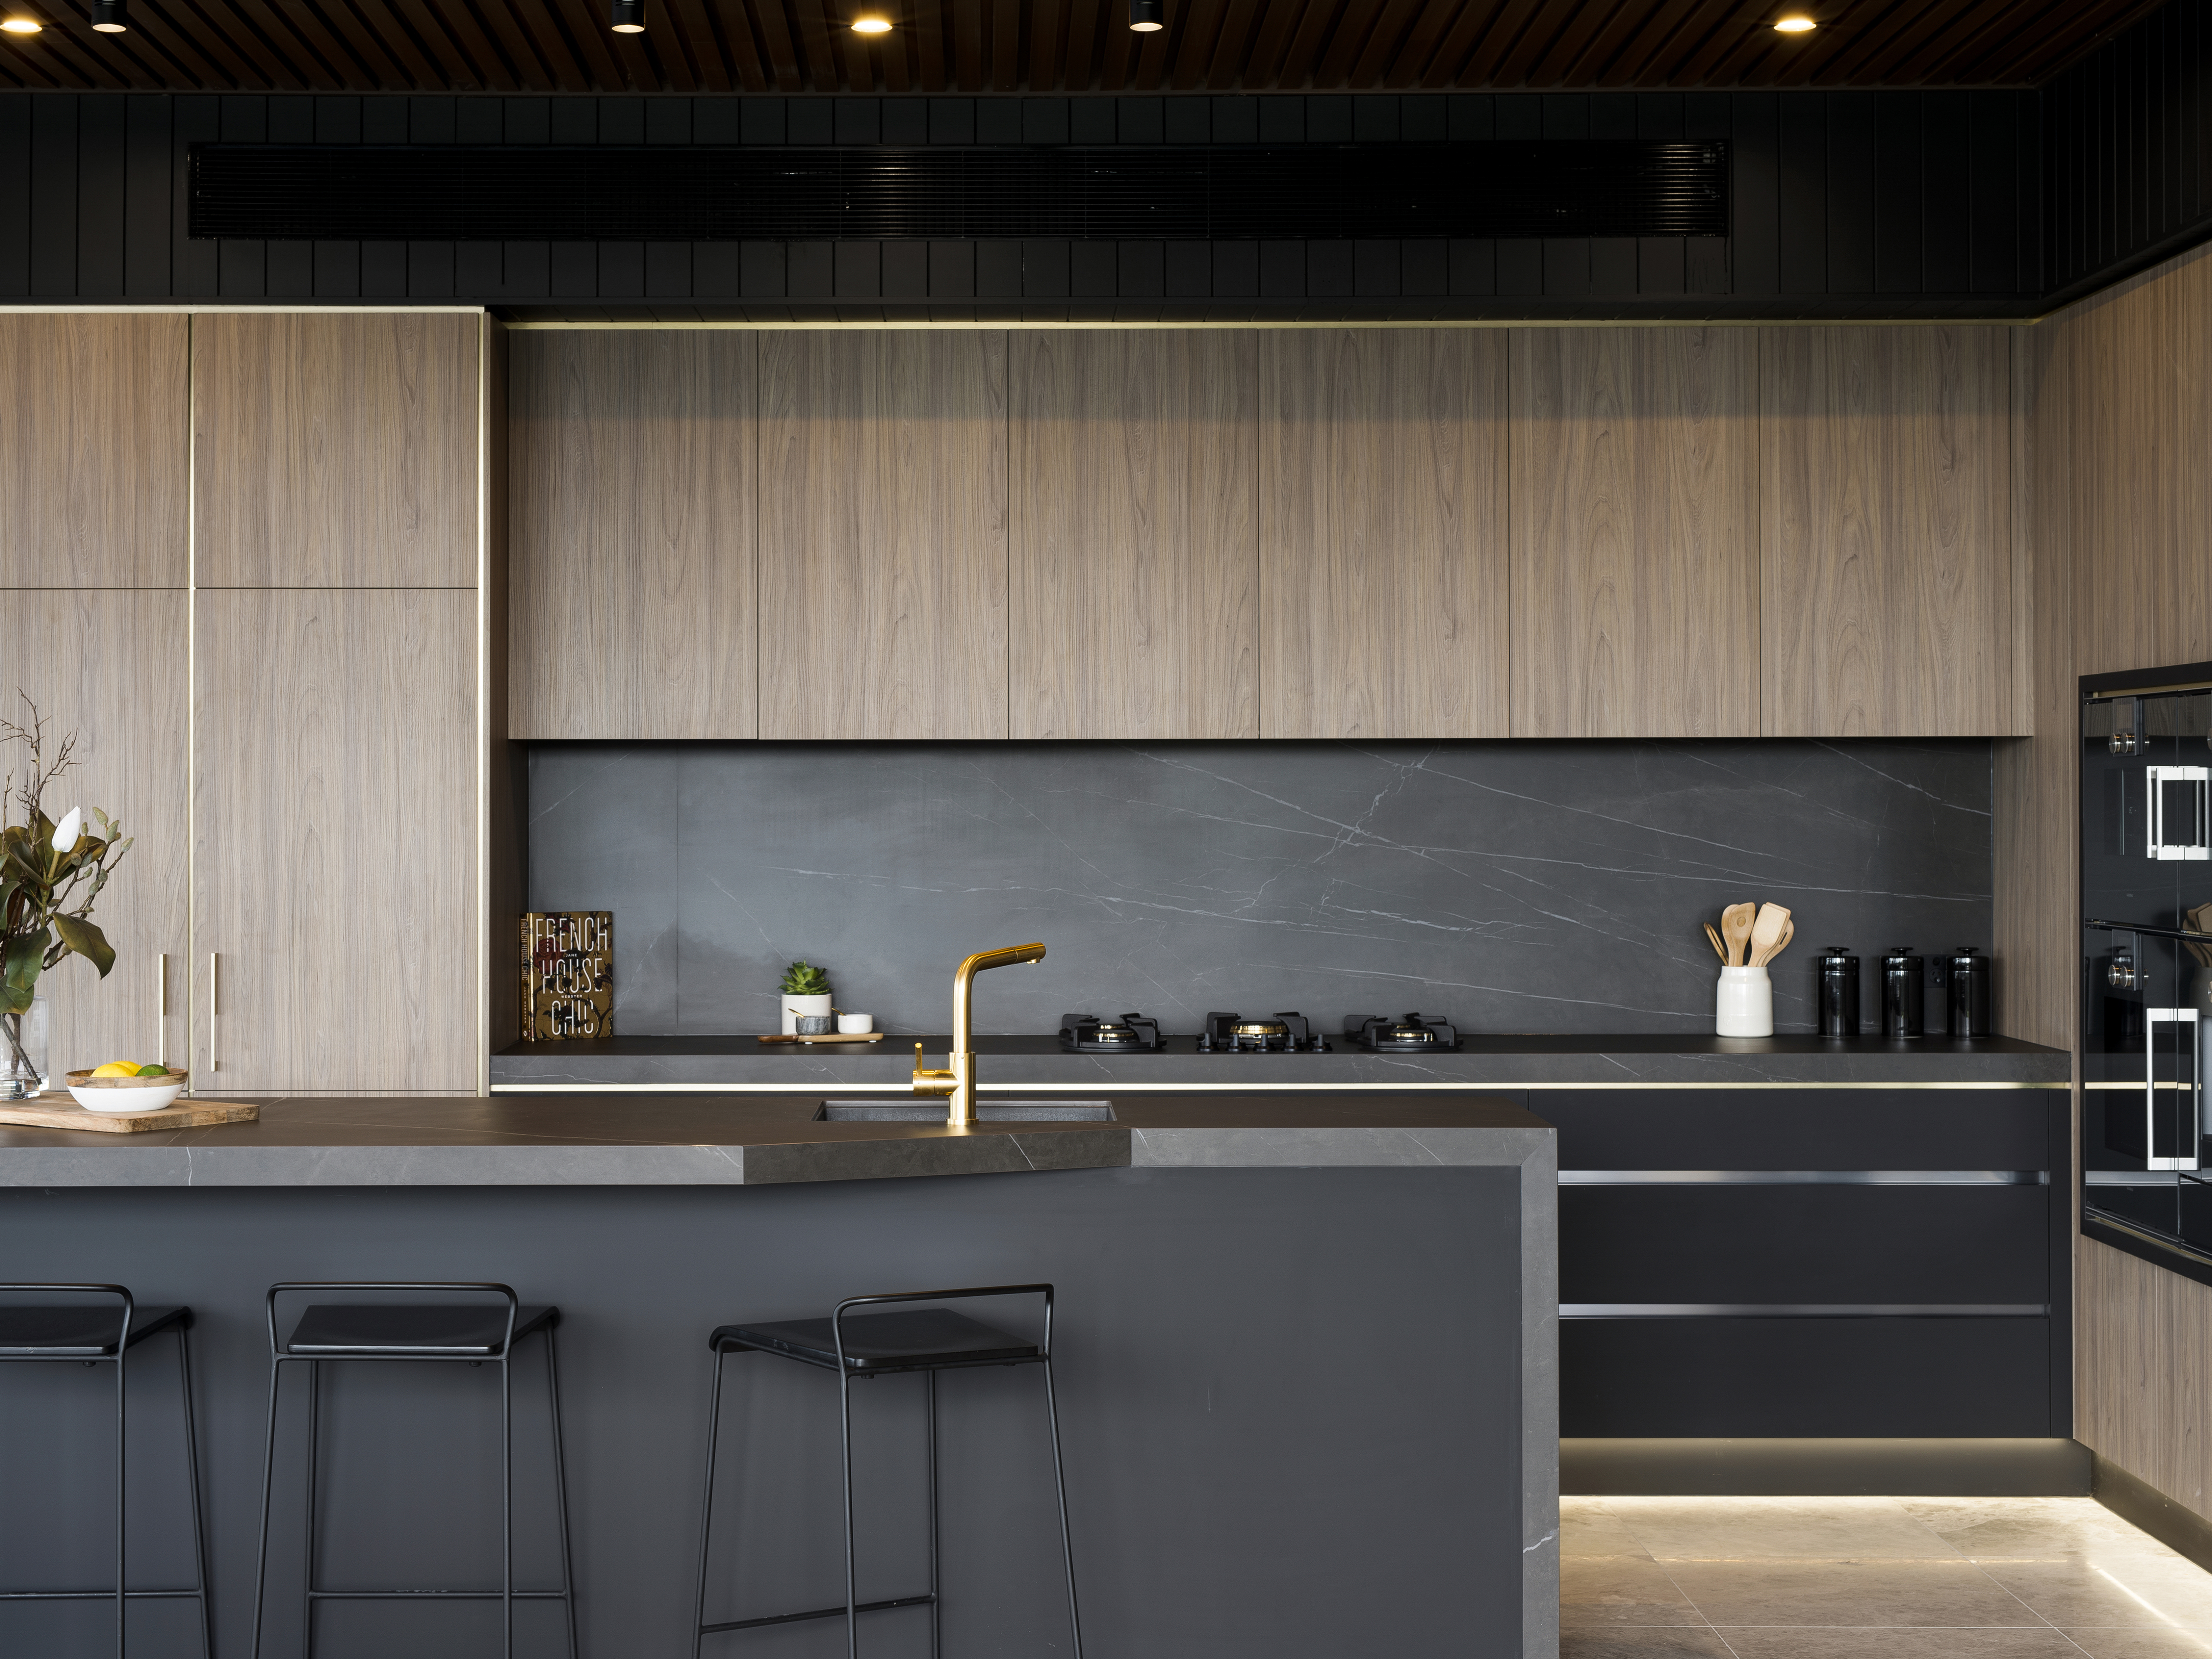 It's back to black for kitchen design | Architecture & Design